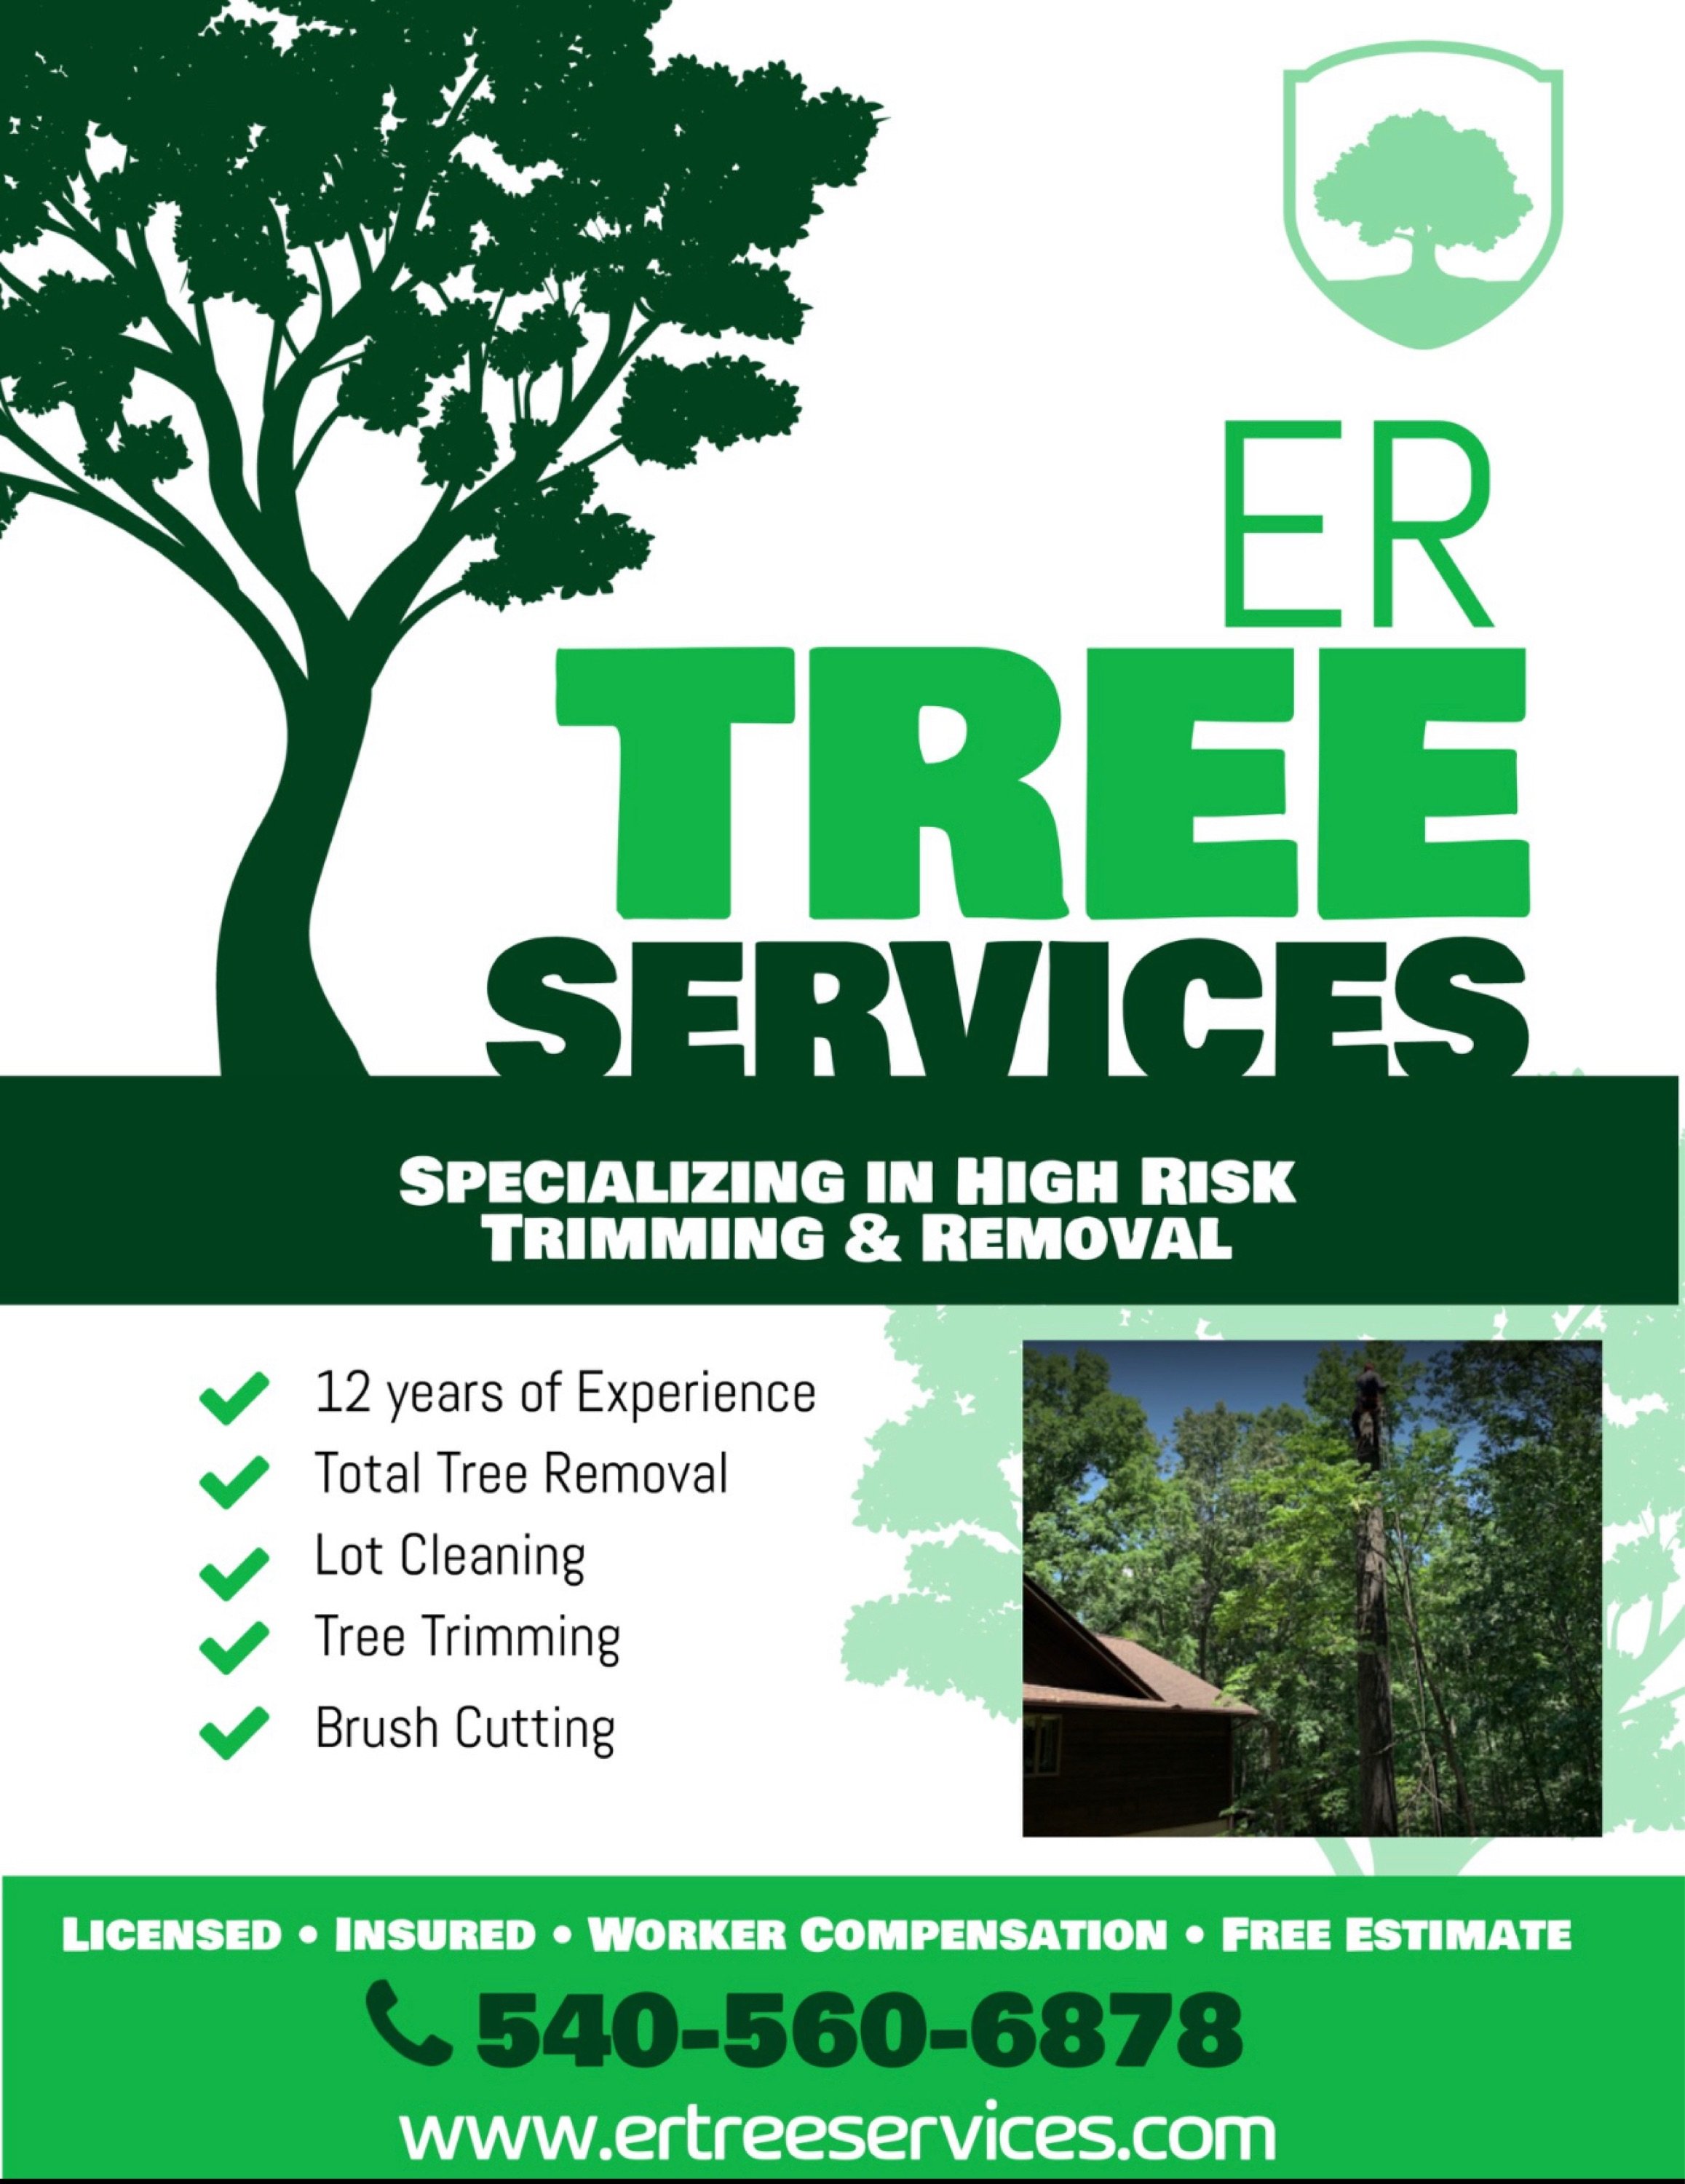 ER Tree Services Logo